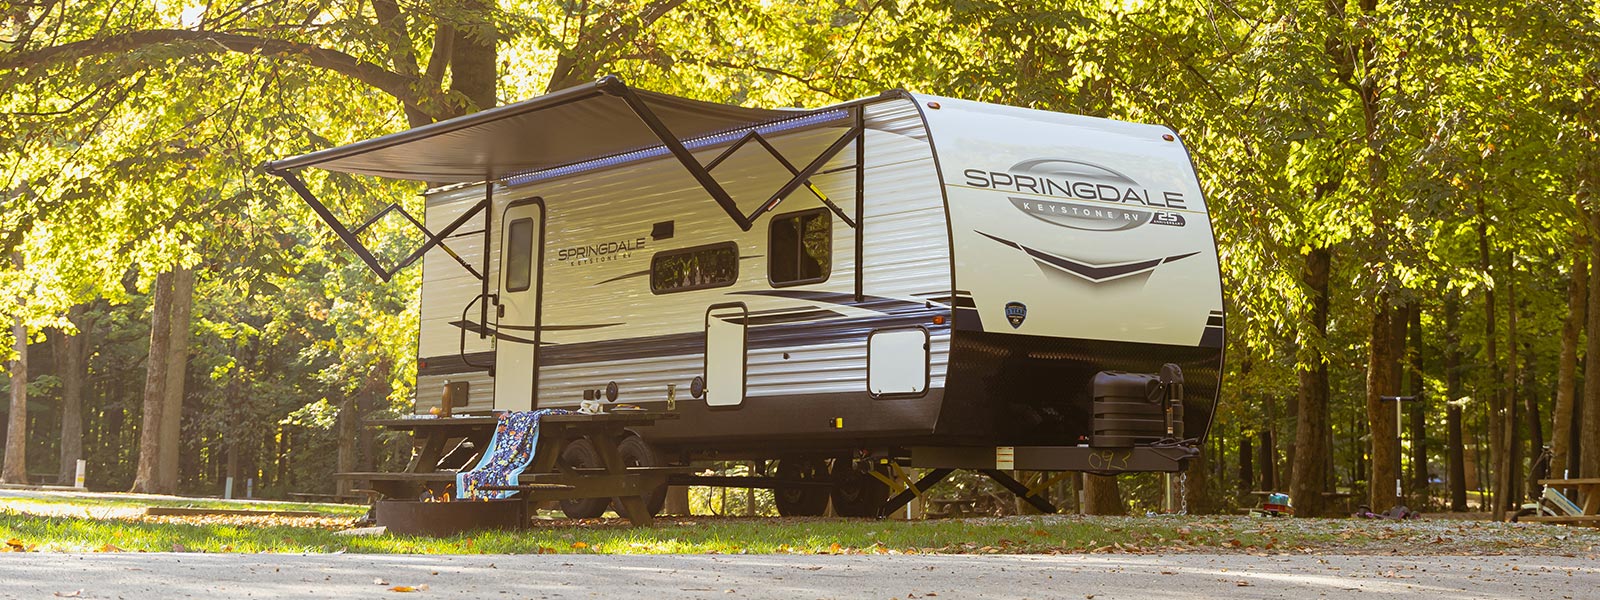 Finance New Keystone RV Springdale Travel Trailer in Ontario Canada